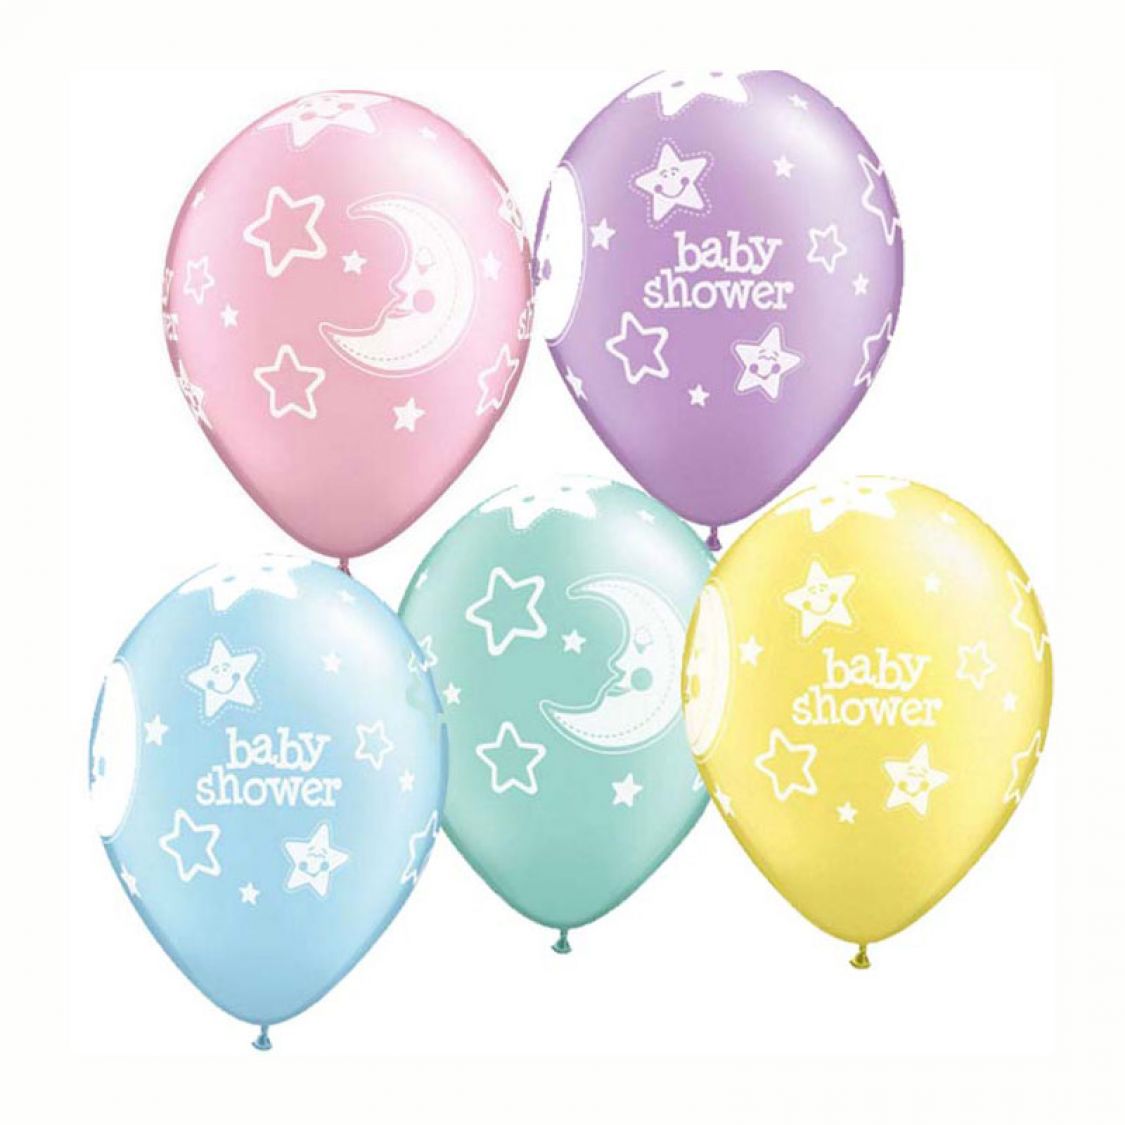 Ballon Baby Shower qualatex assortiment pastel